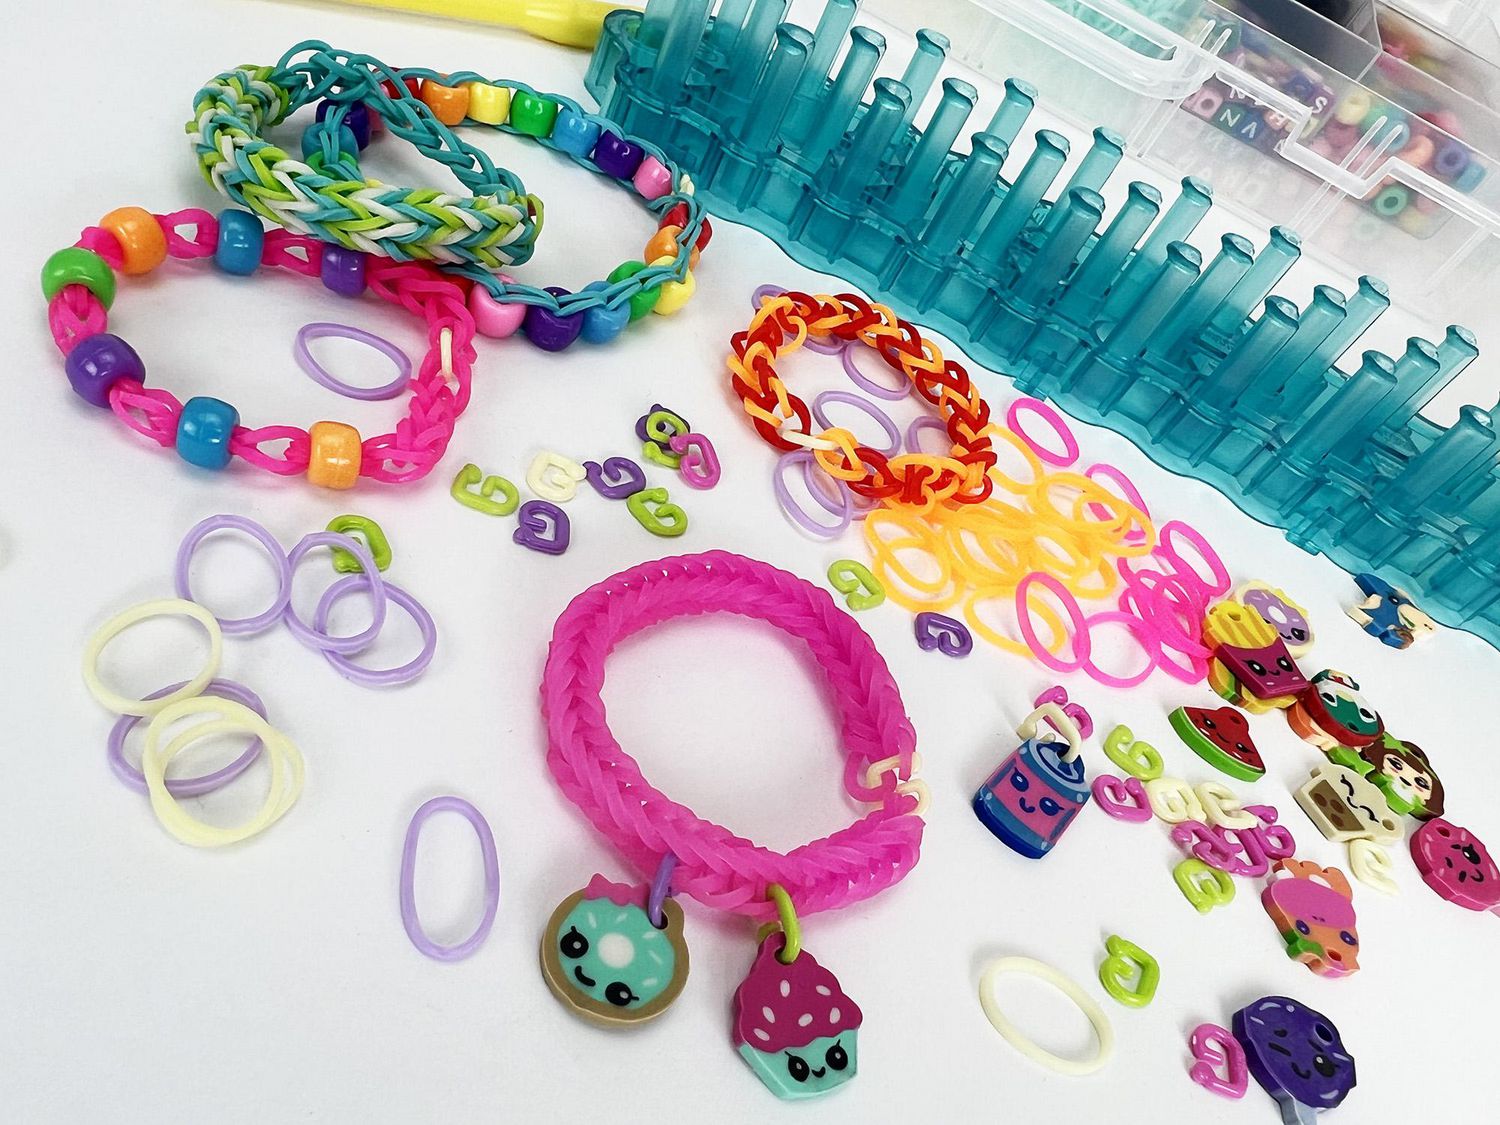 How to Make Rubber Band Bracelets: 25 Bracelet Patterns